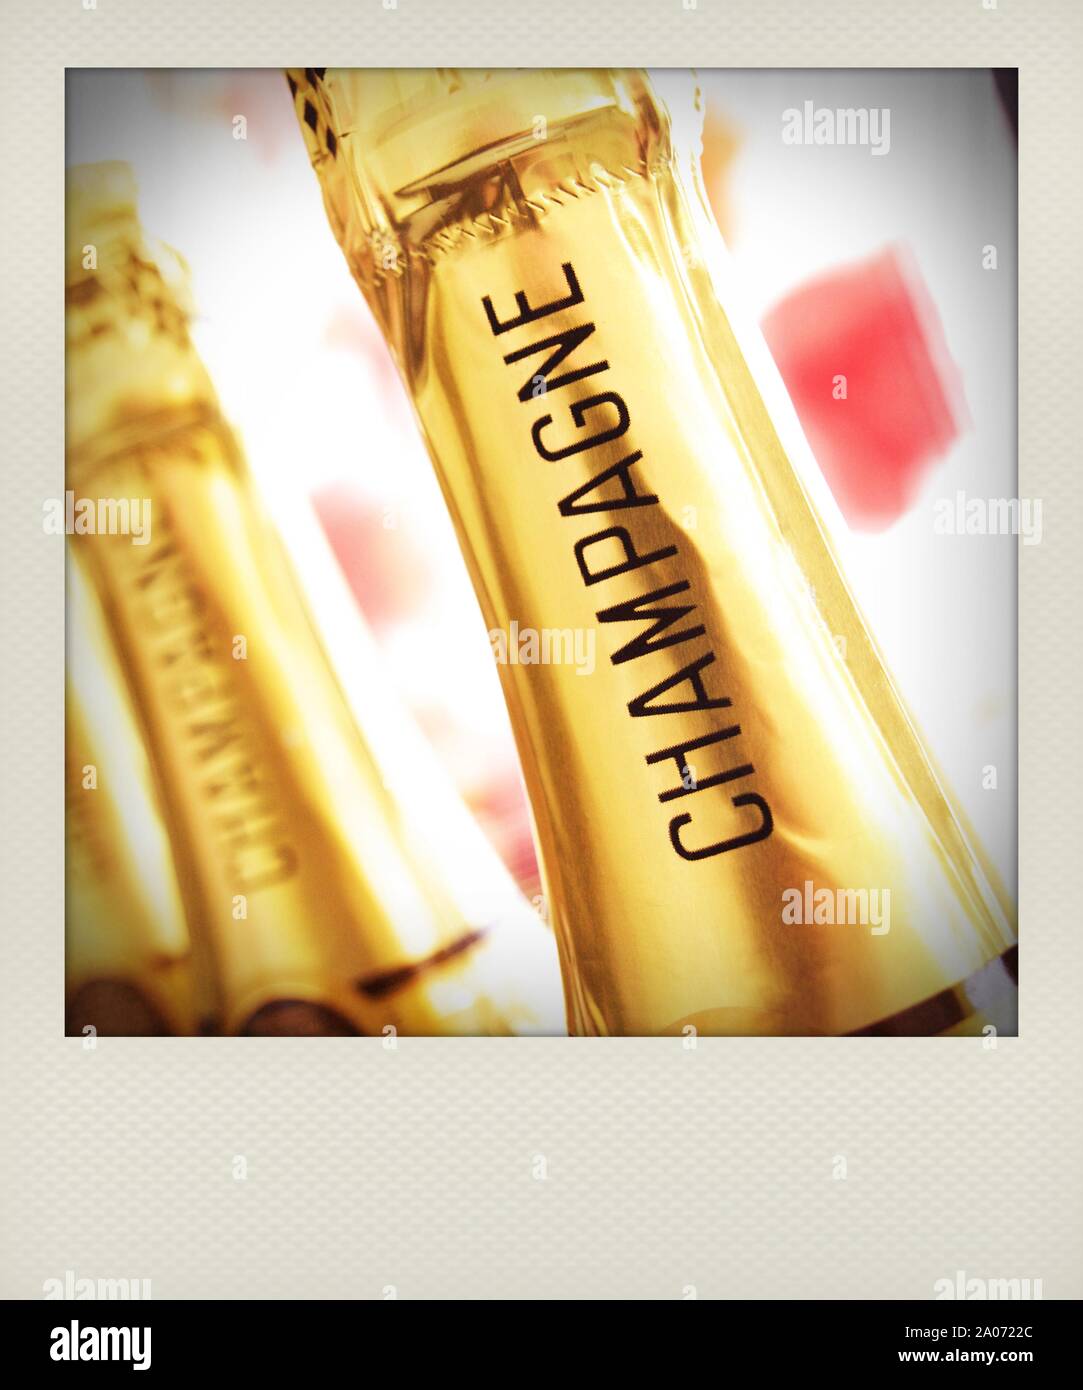 Polaroid bottles of Champagne Stock Photo